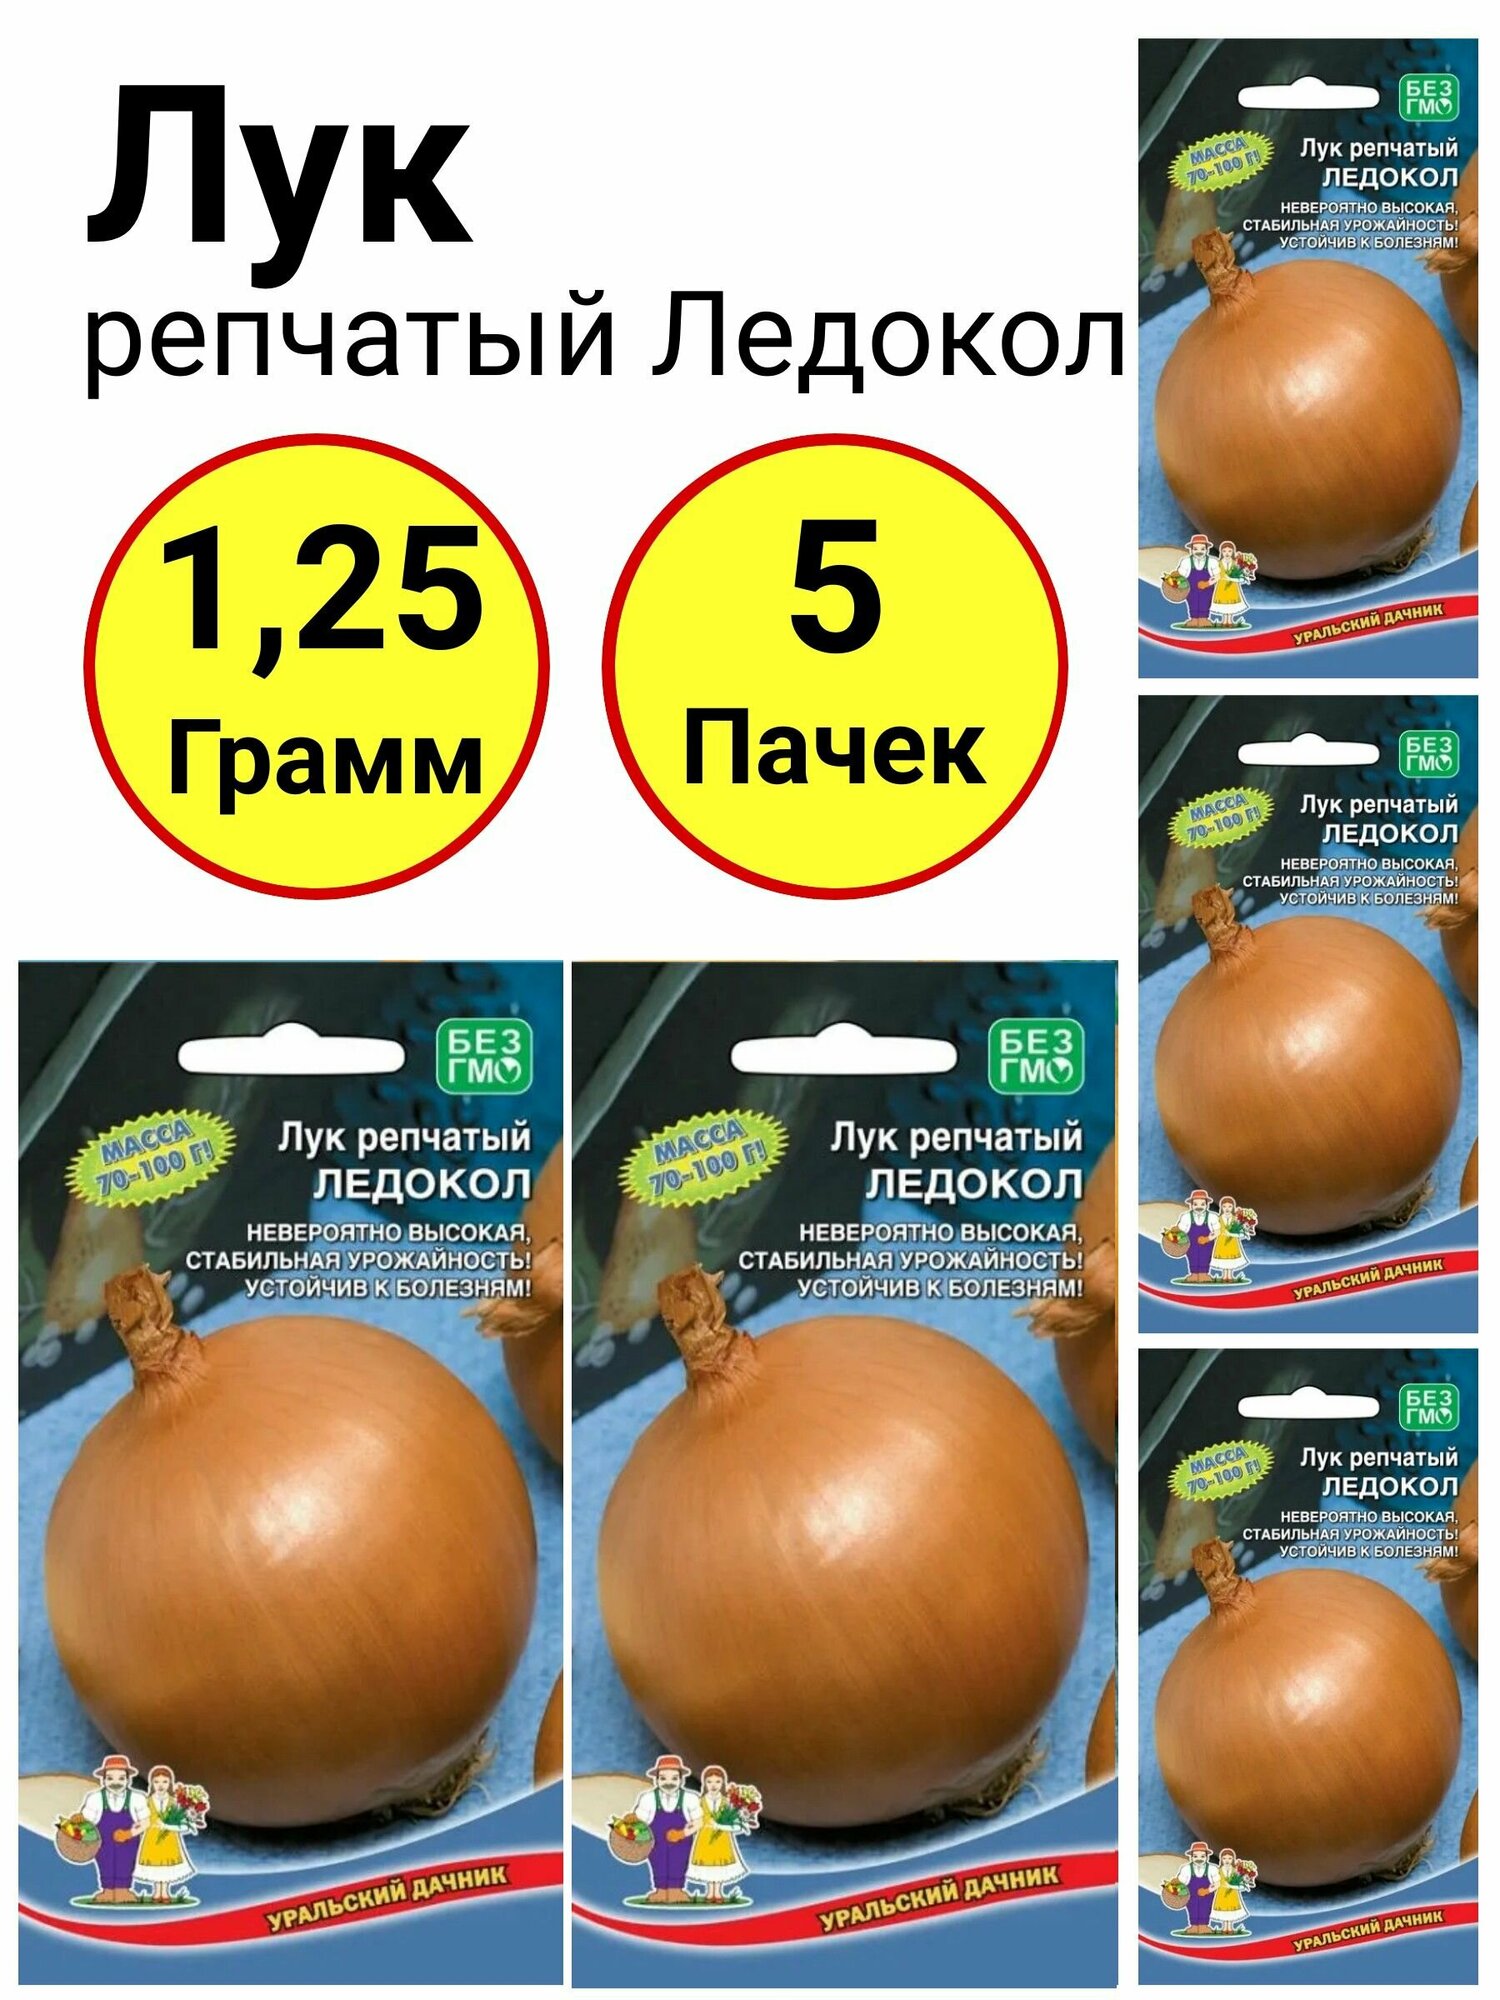 Лук репчатый Ледокол 025 грамм Уральский дачник - 5 пачек